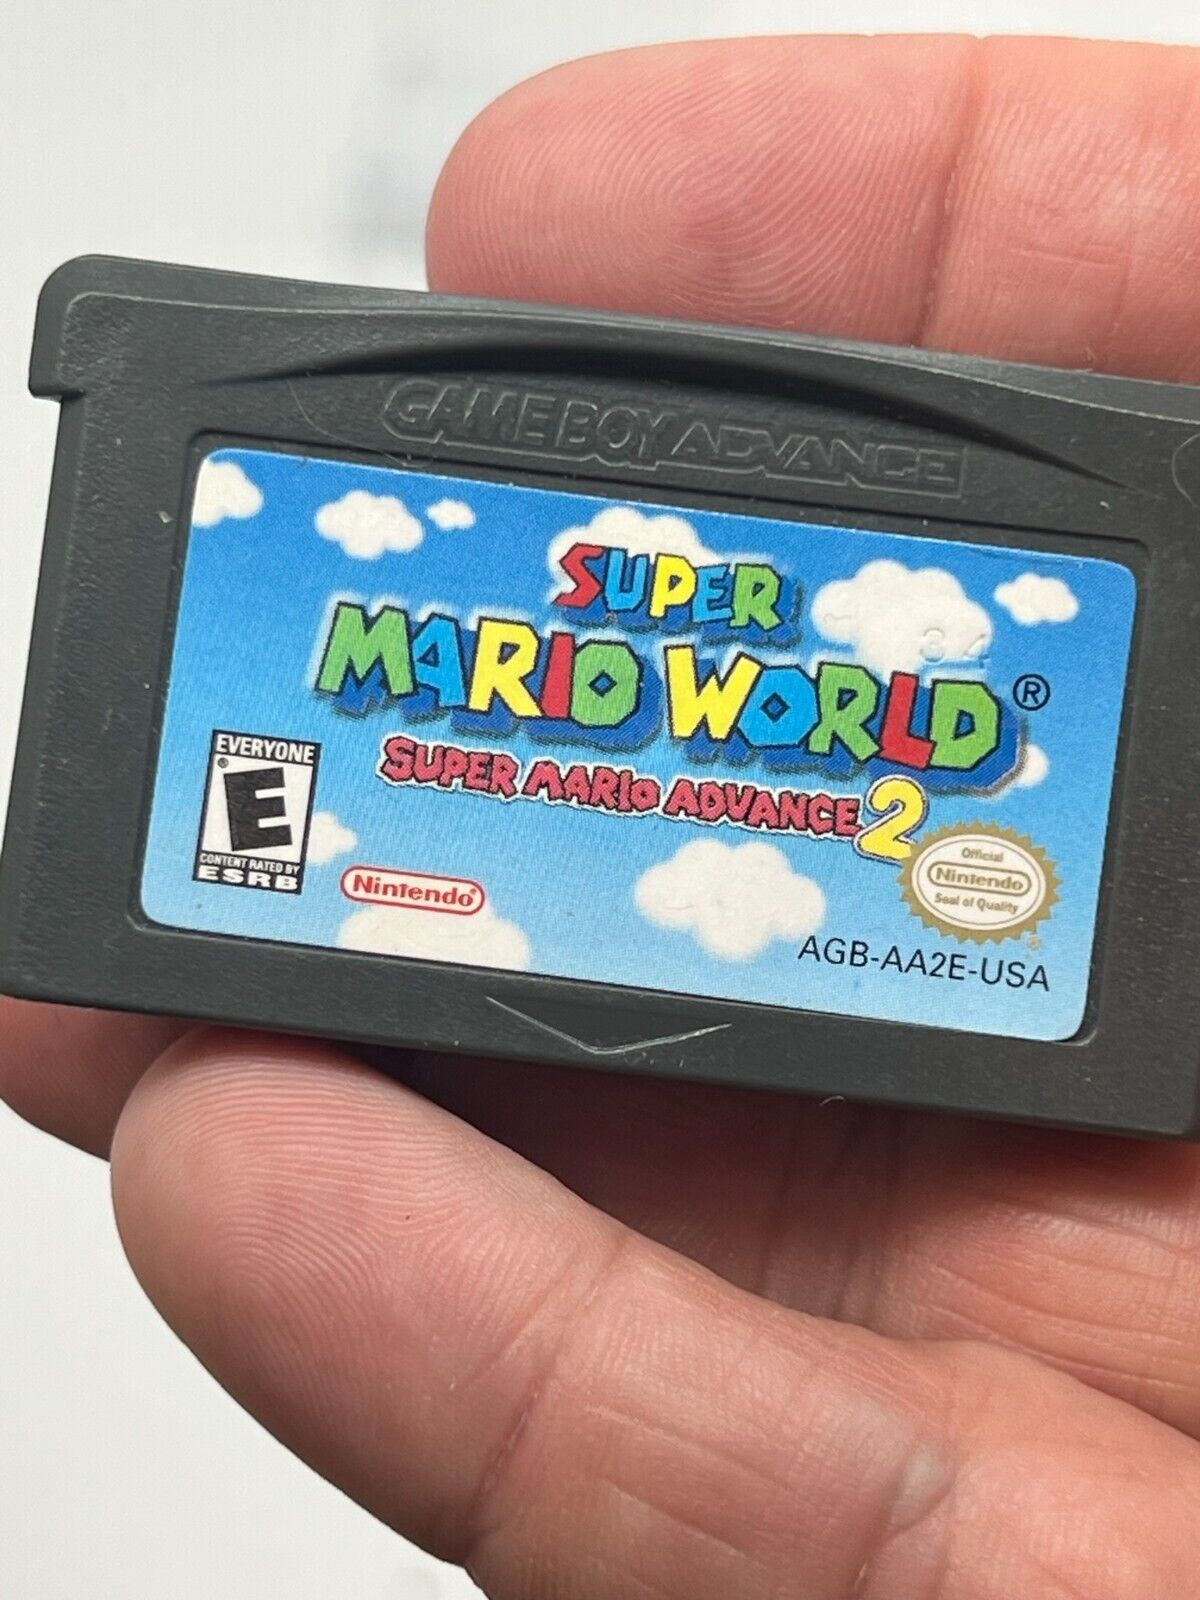 Super Mario World: Super Mario Advance 2 for Nintendo Game Boy Advance (GBA)